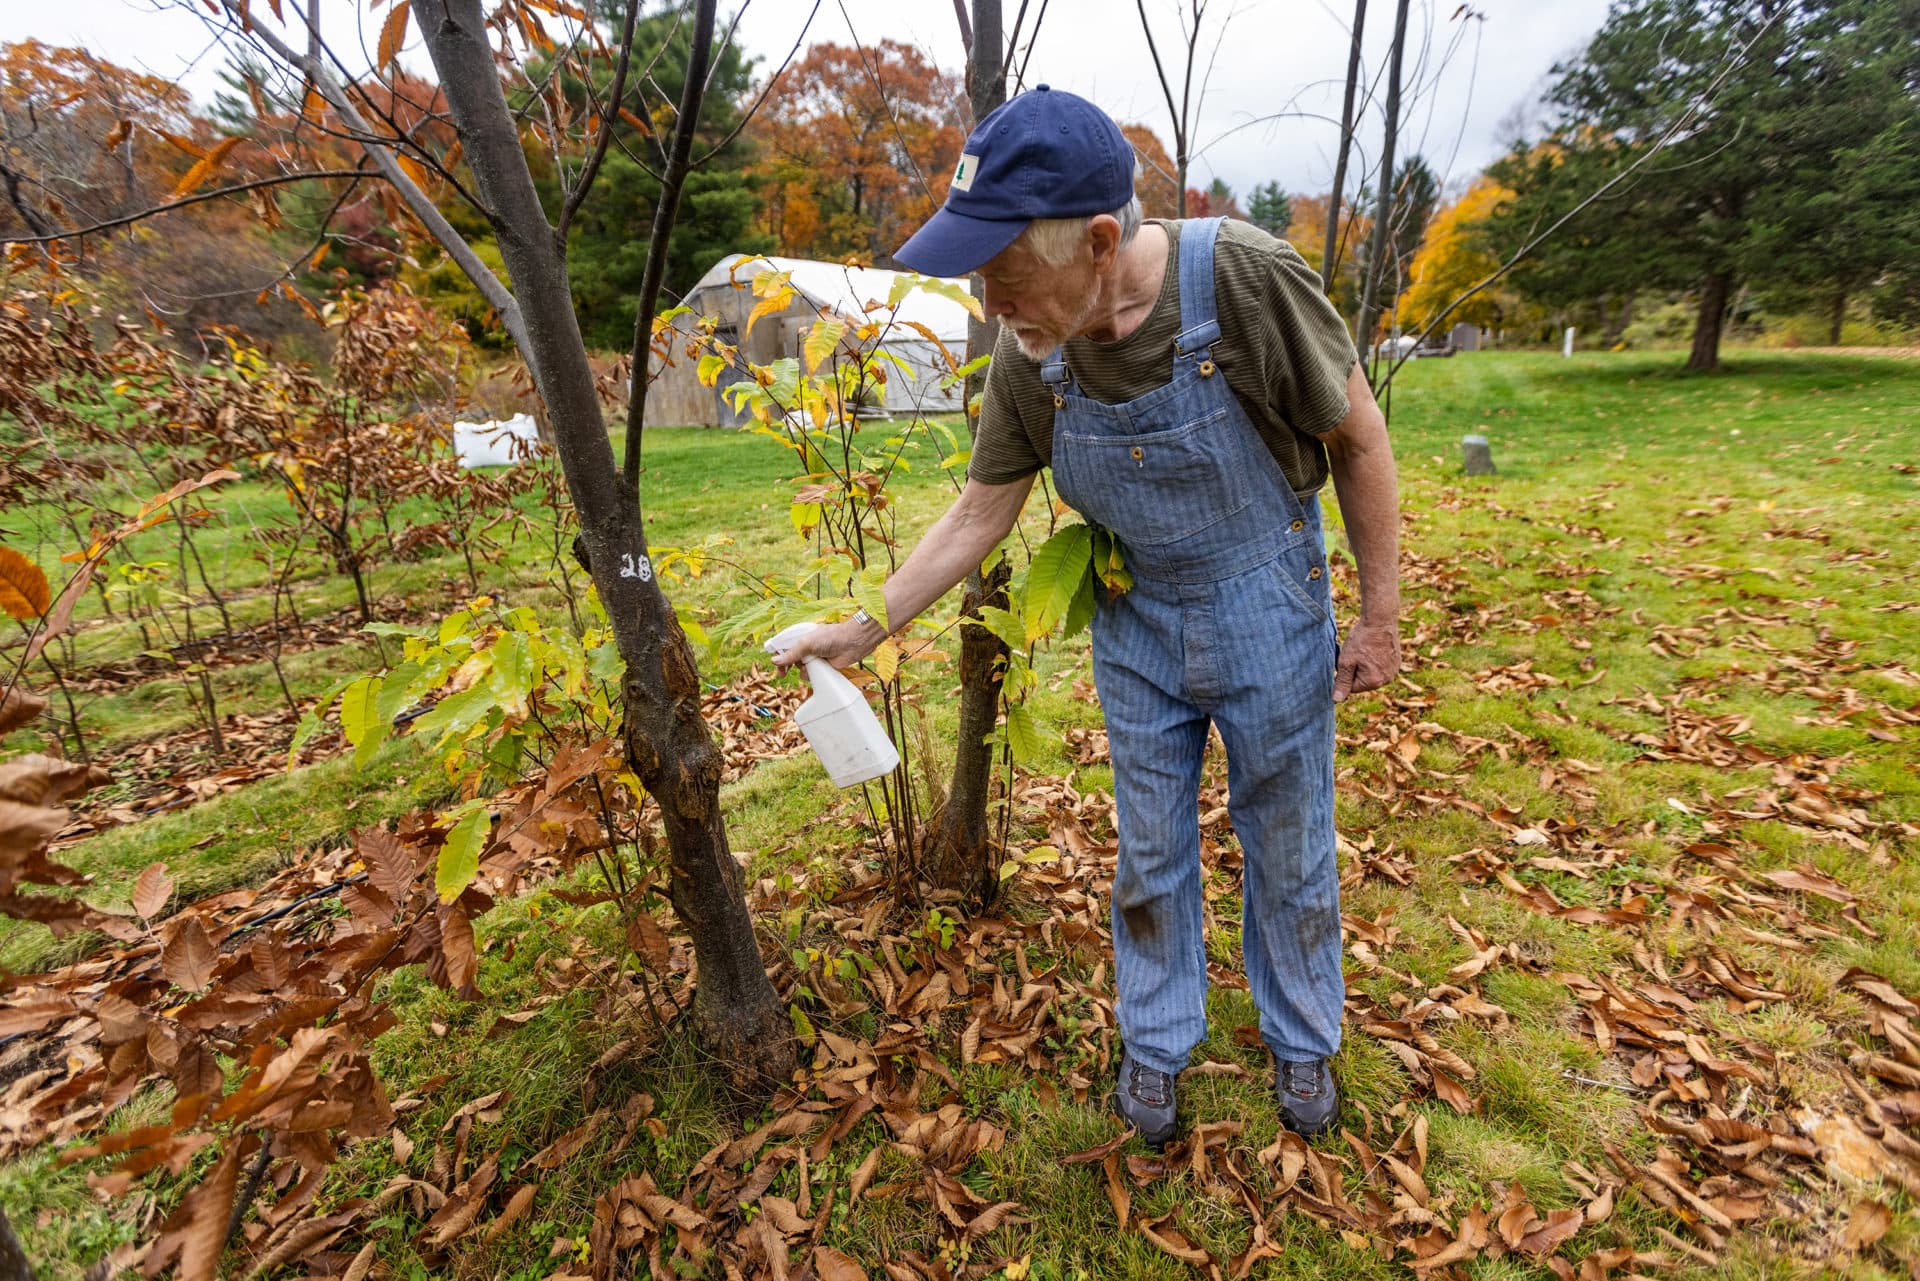 John Emery sprays deer repellent onto chestnut trees. (Jesse Costa/WBUR)